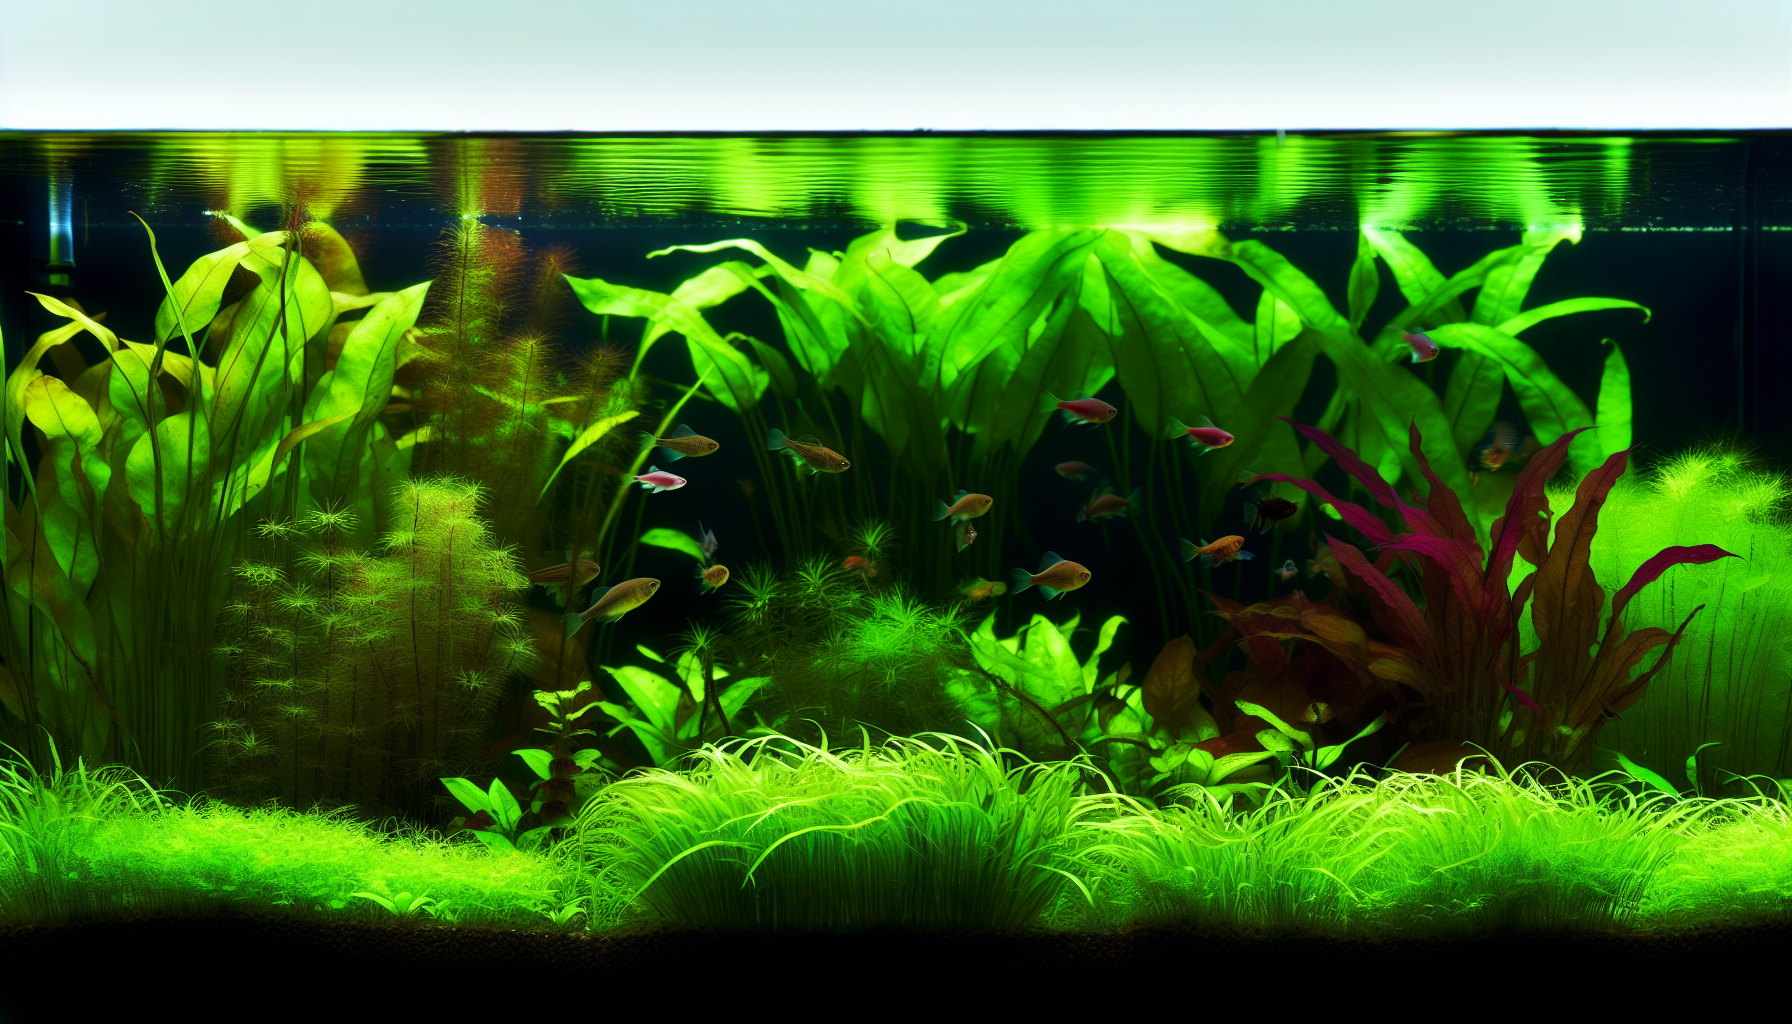 A variety of lush green aquatic plants in a freshwater aquarium